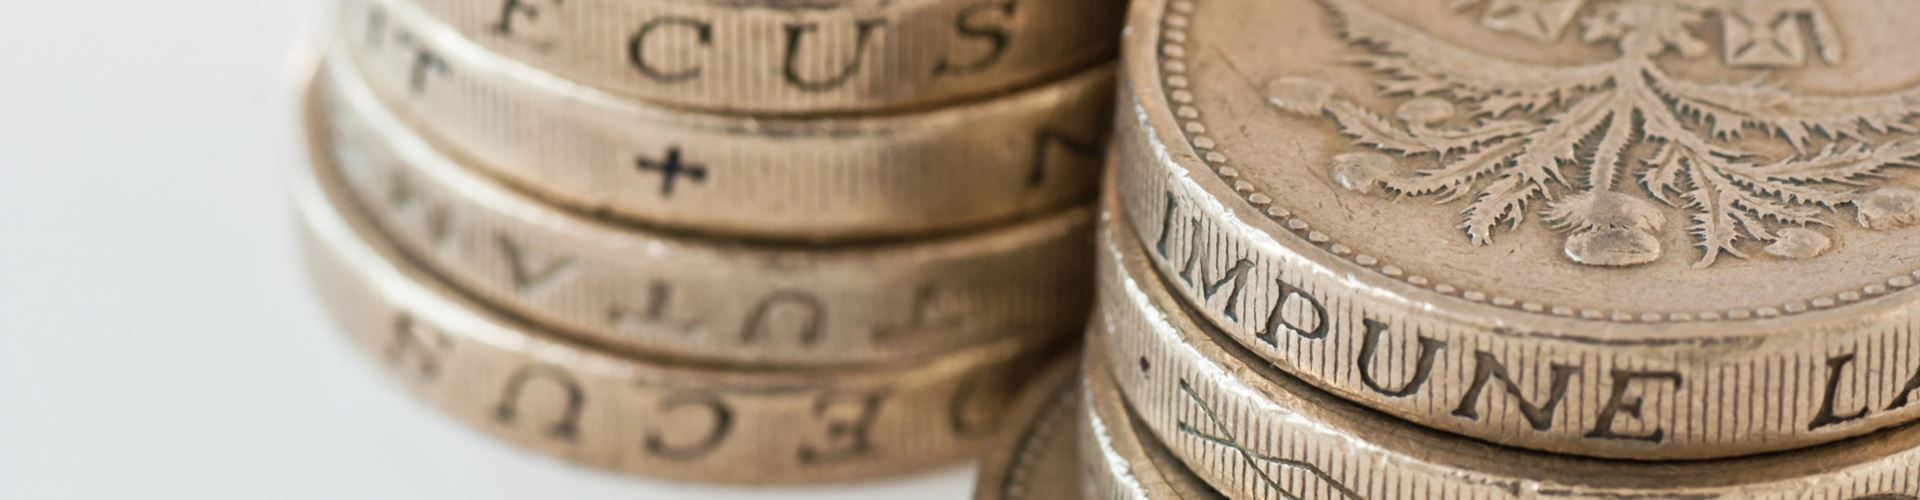 Accountancy bonus pot increases to record £2.4 billion 